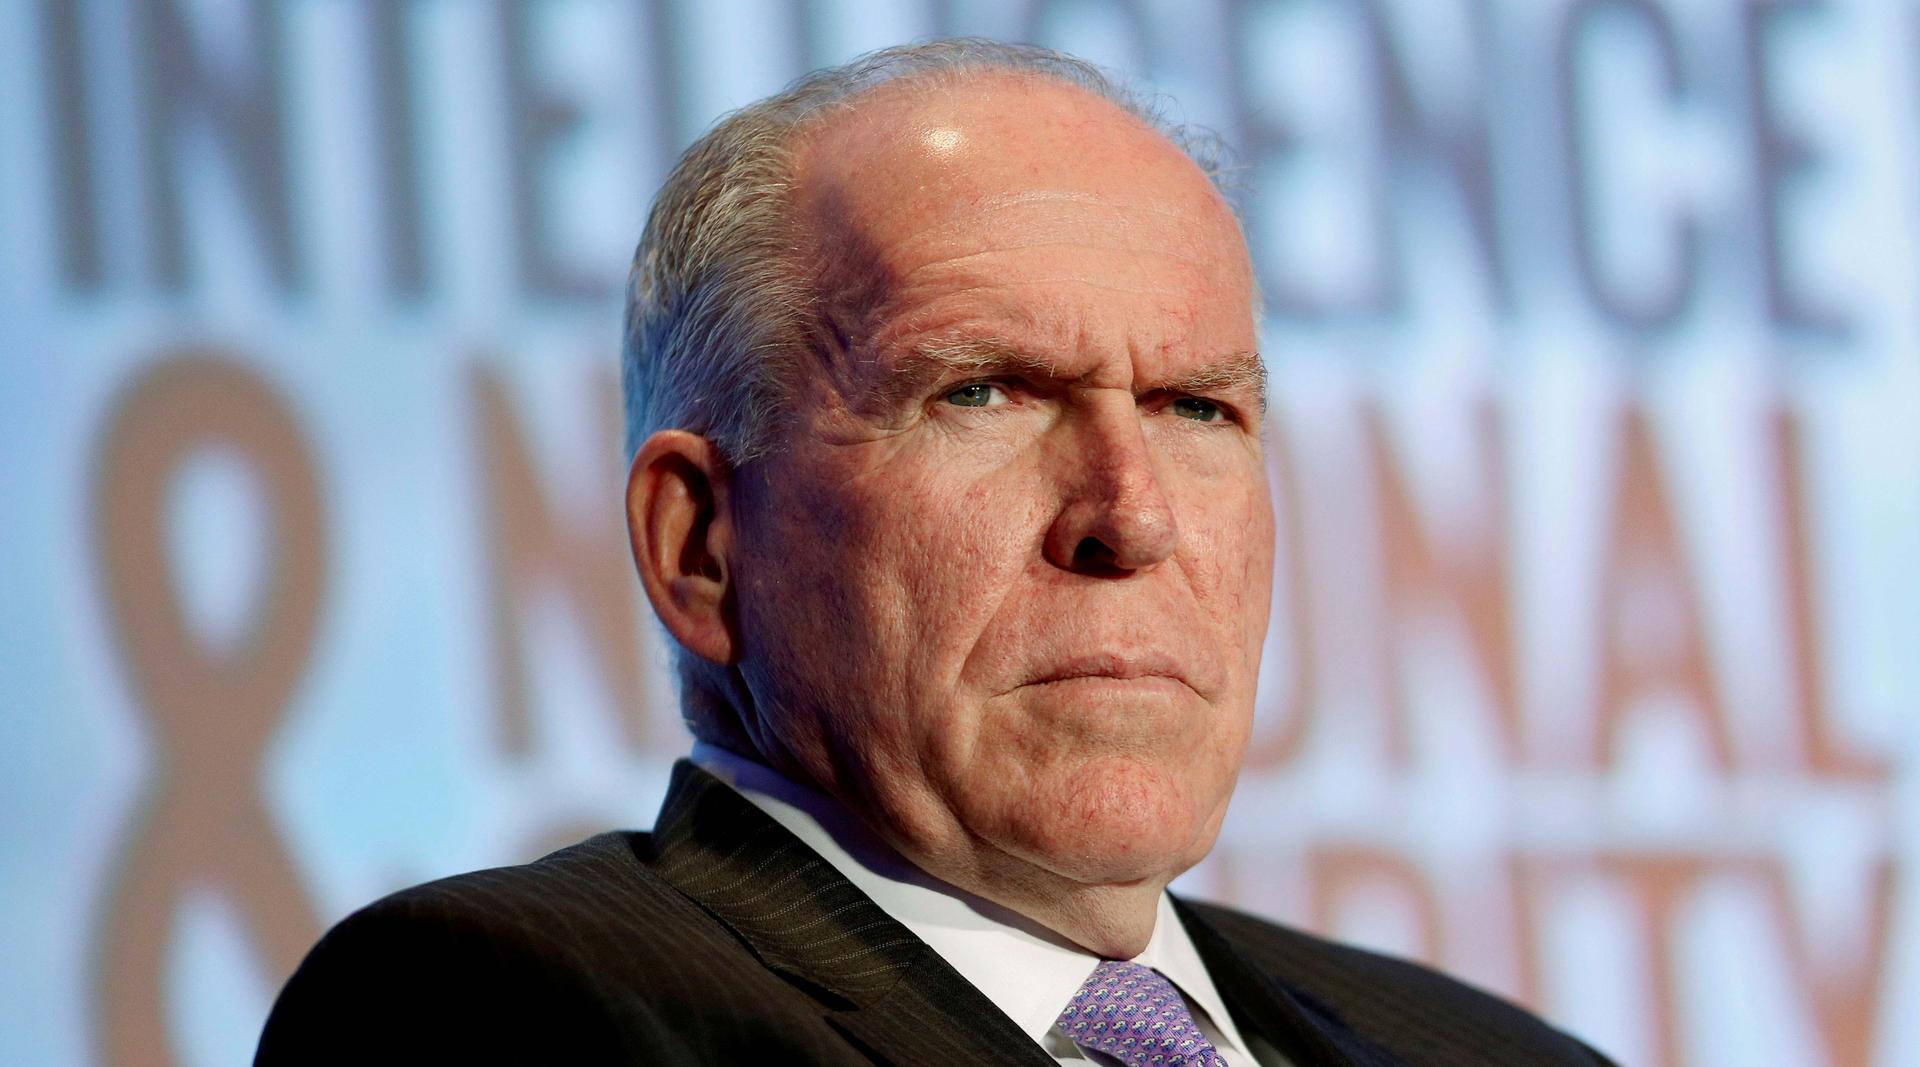 CIA Director John Brennan at an intelligence summit in DC on Sept. 8.